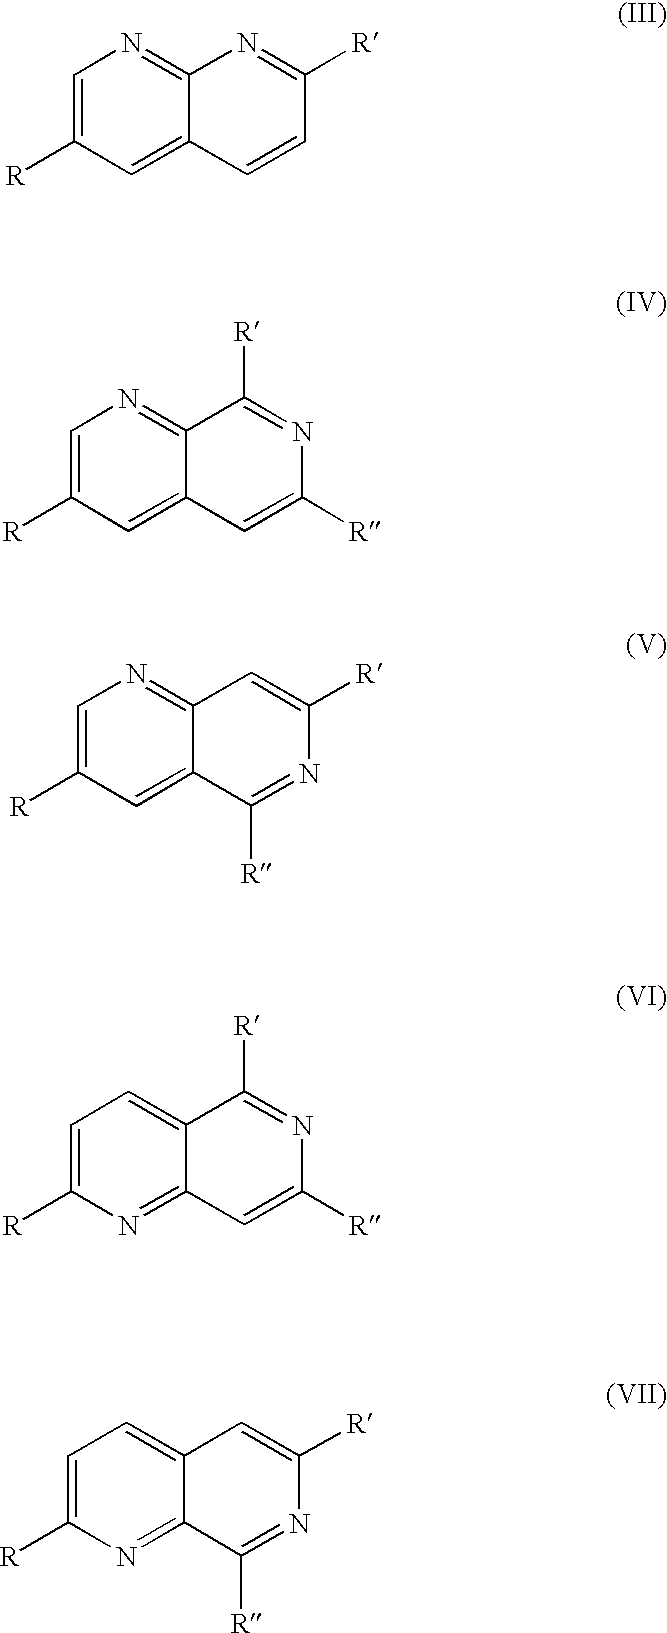 Polyazanaphthalene compounds and pharmaceutical use thereof